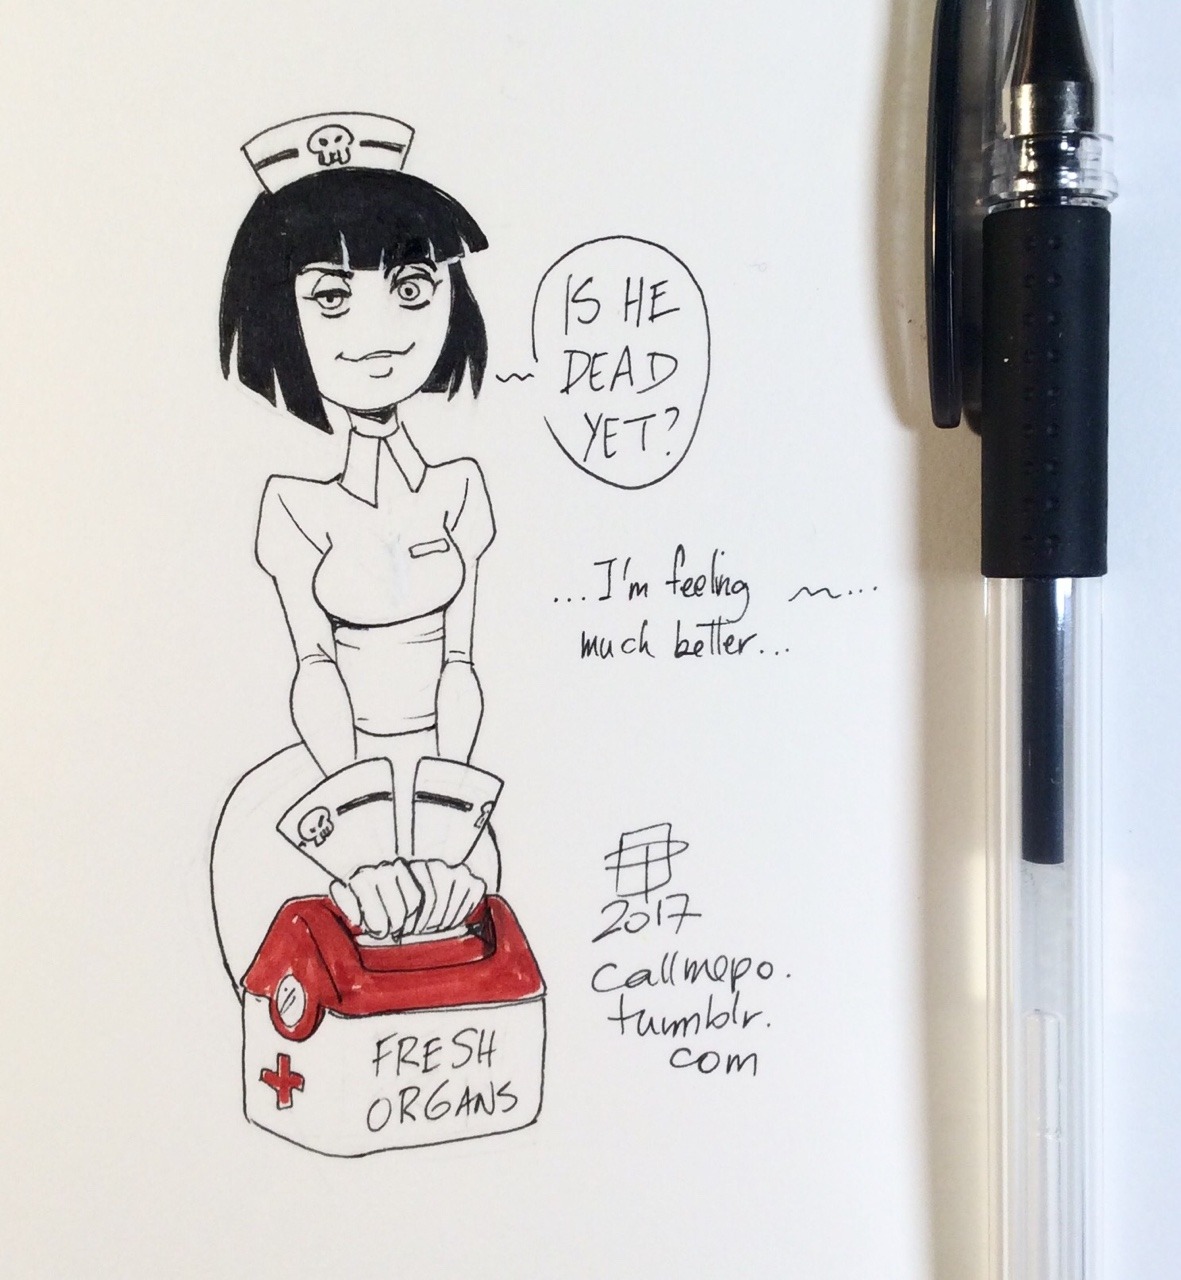 callmepo: Naughty nurse master post.  The full collection of naughty nurse tiny doodles